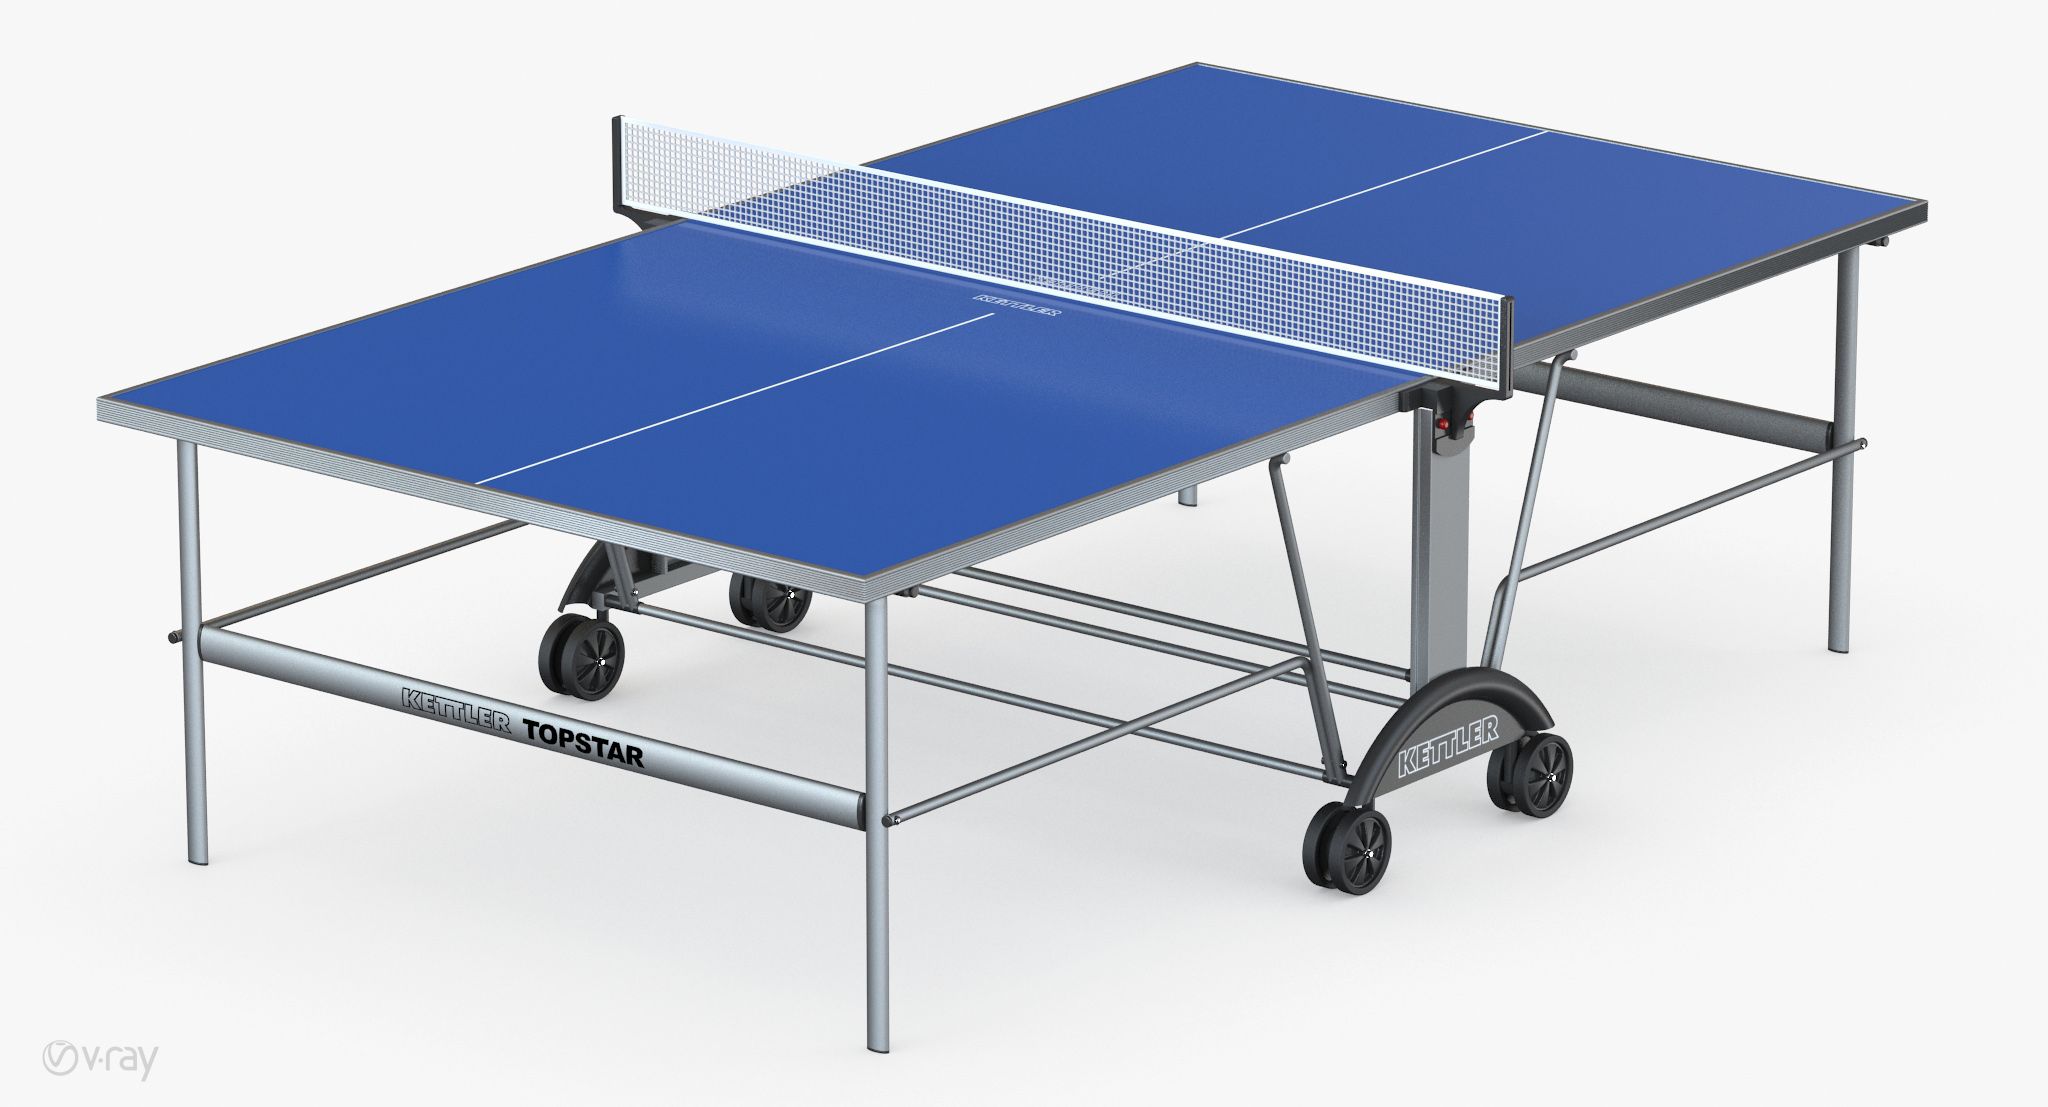 Kettler top star xl - weatherproof table tennis table